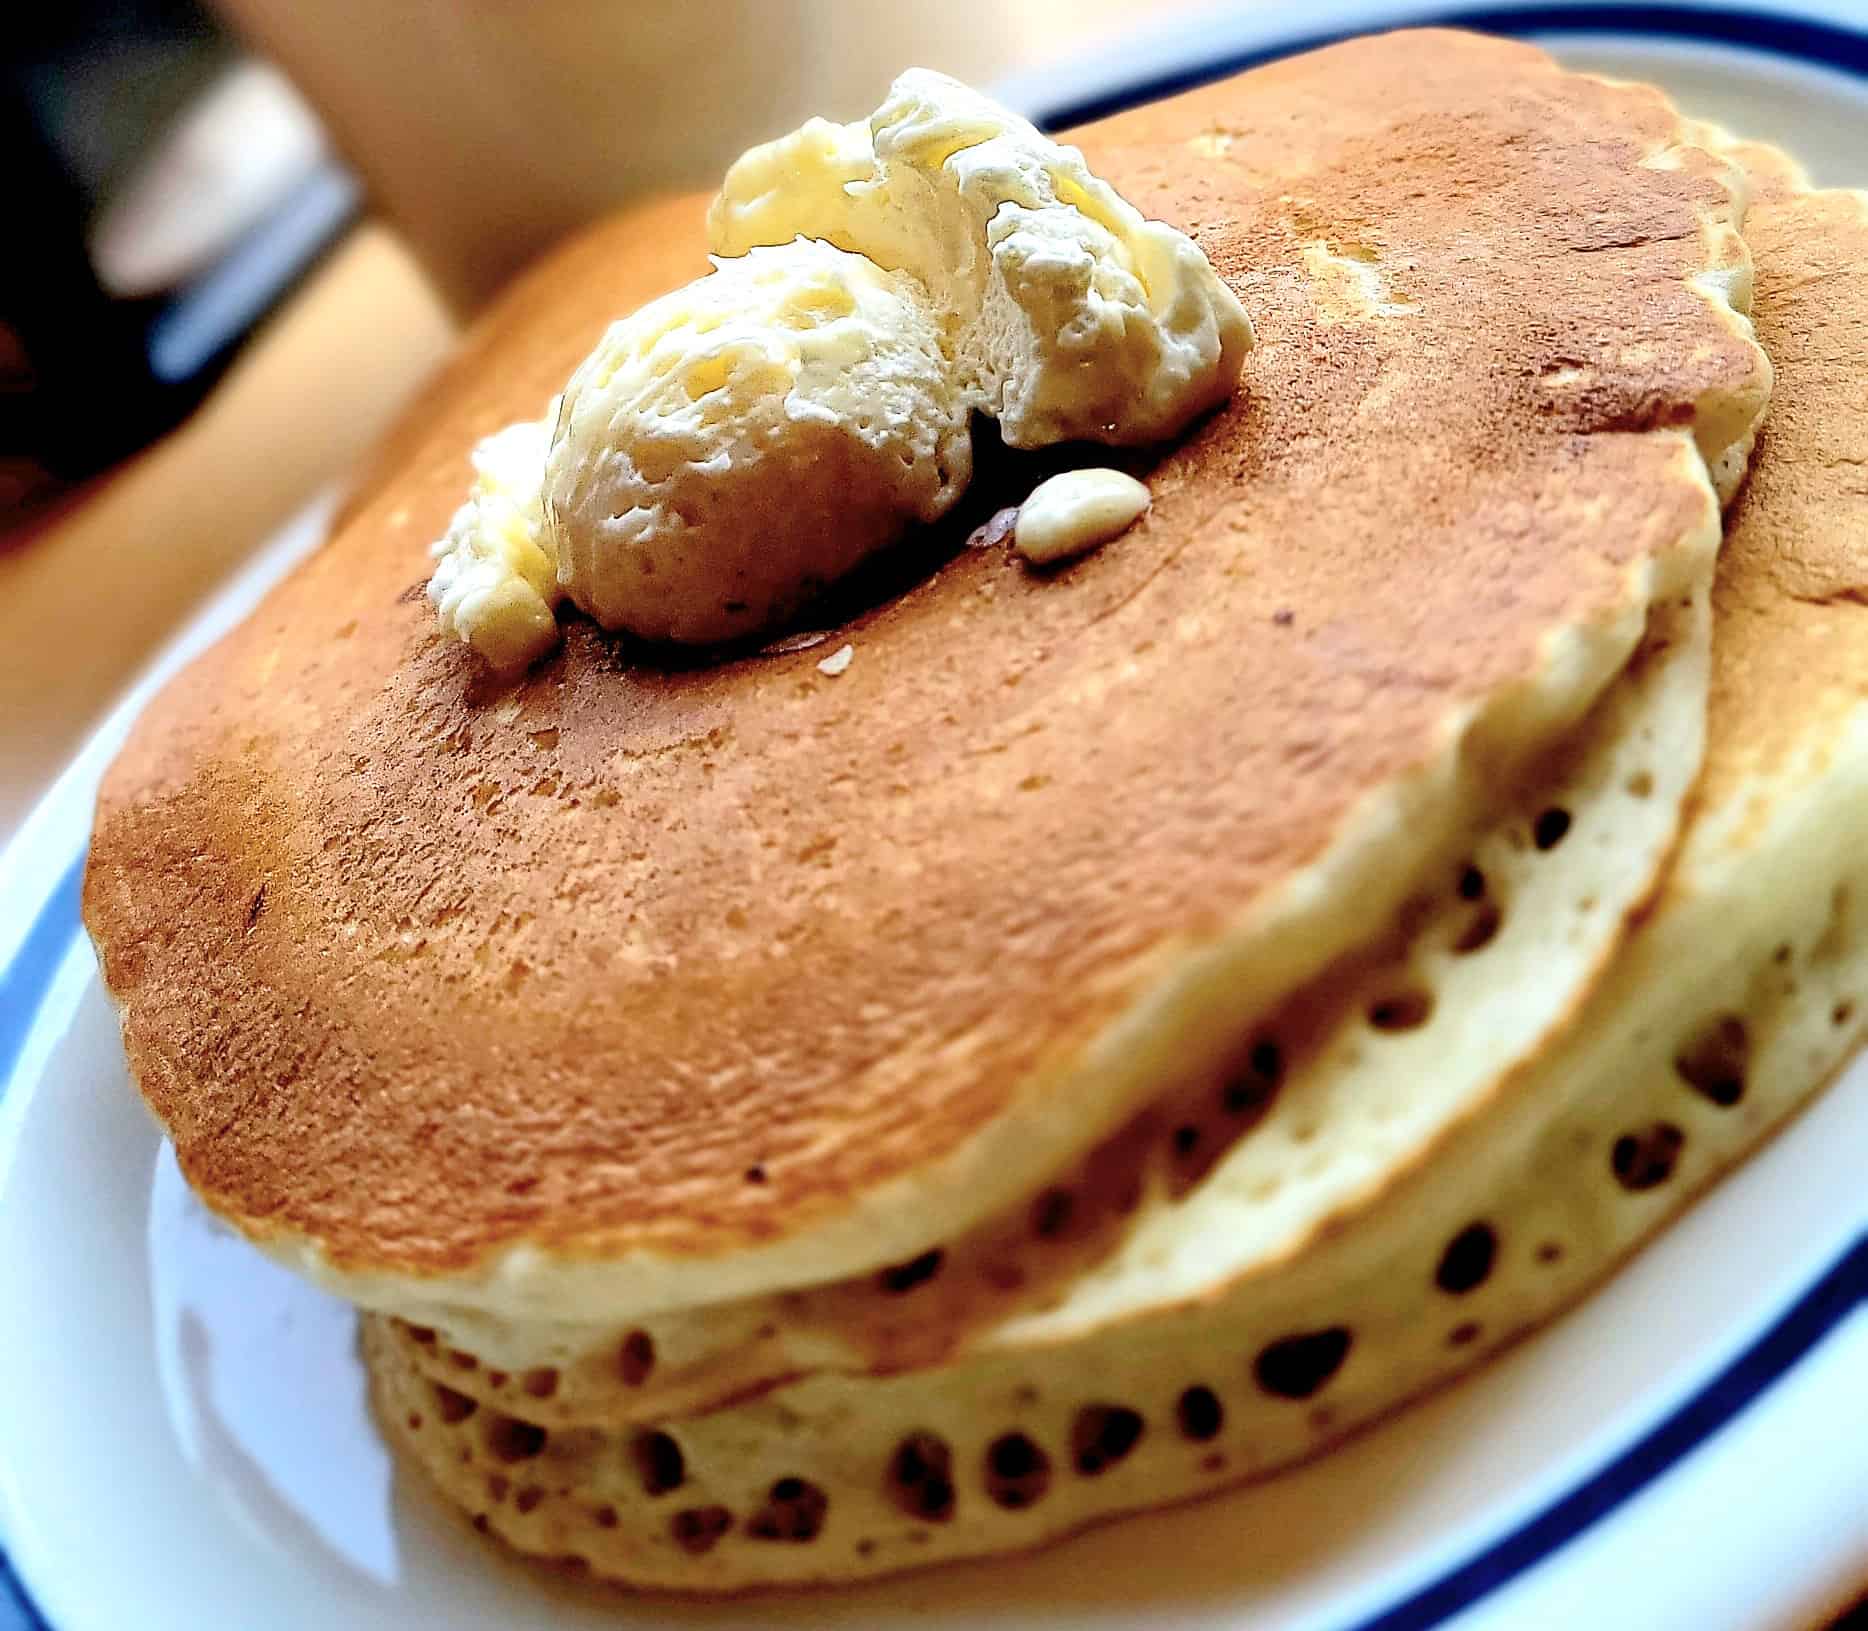 ihop opening in mississauga pancakes breakfast